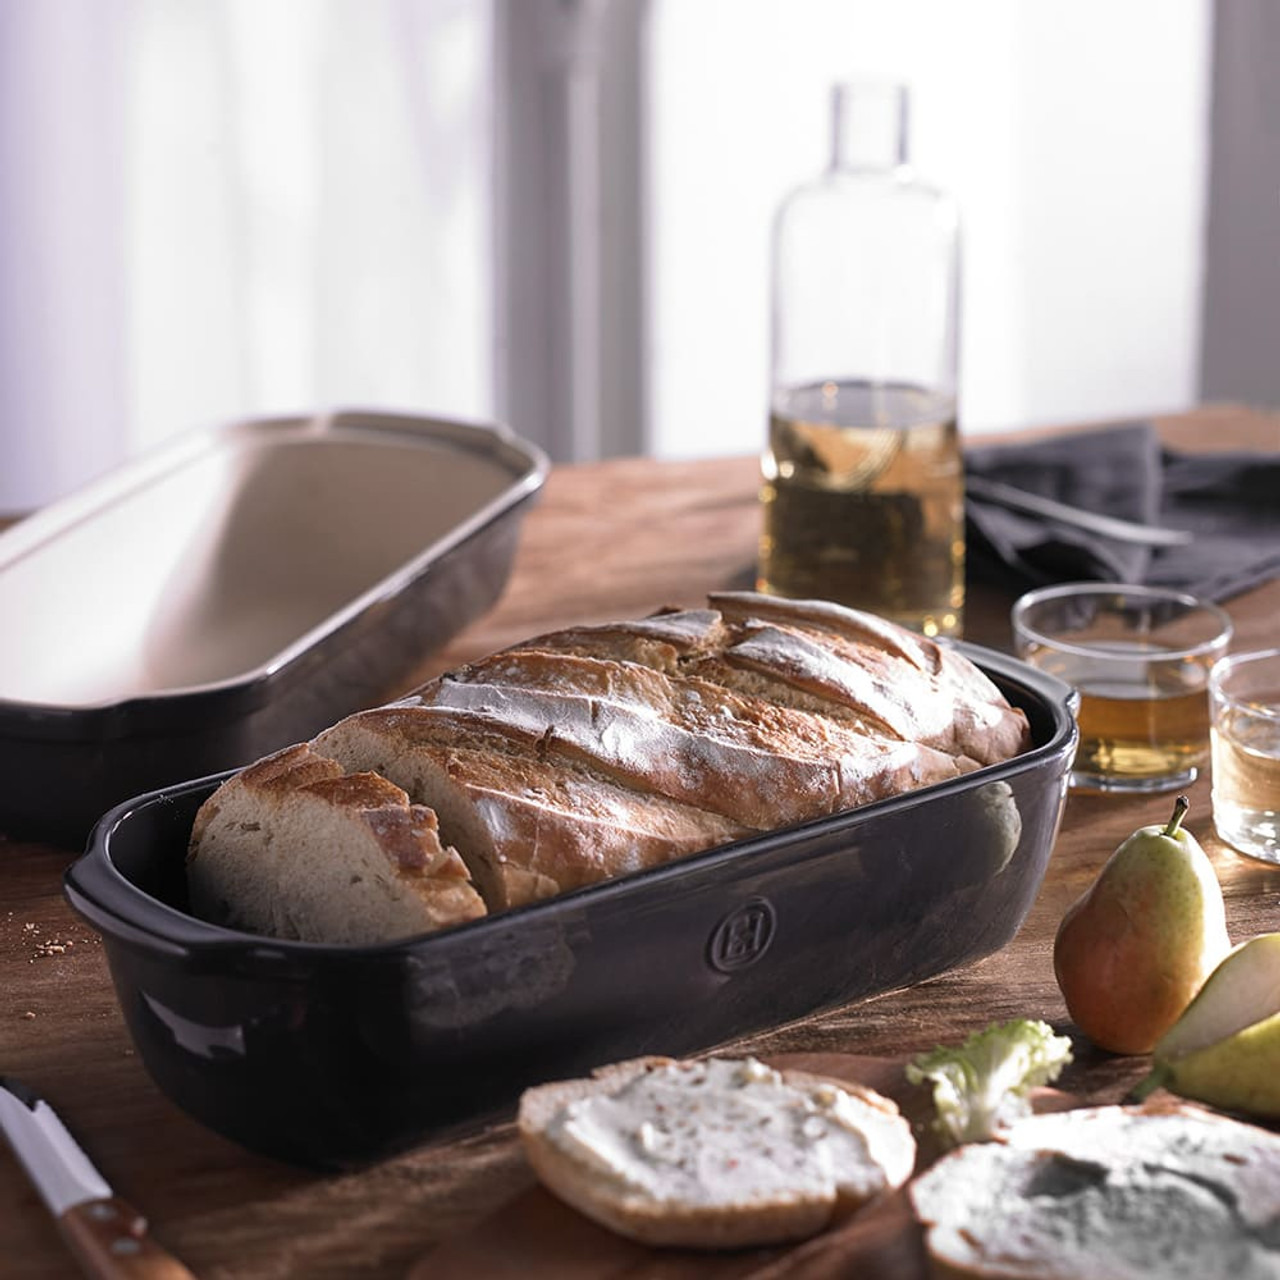 VIC'S RECIPES: No Knead Bread in the Emile Henry Italian Baker